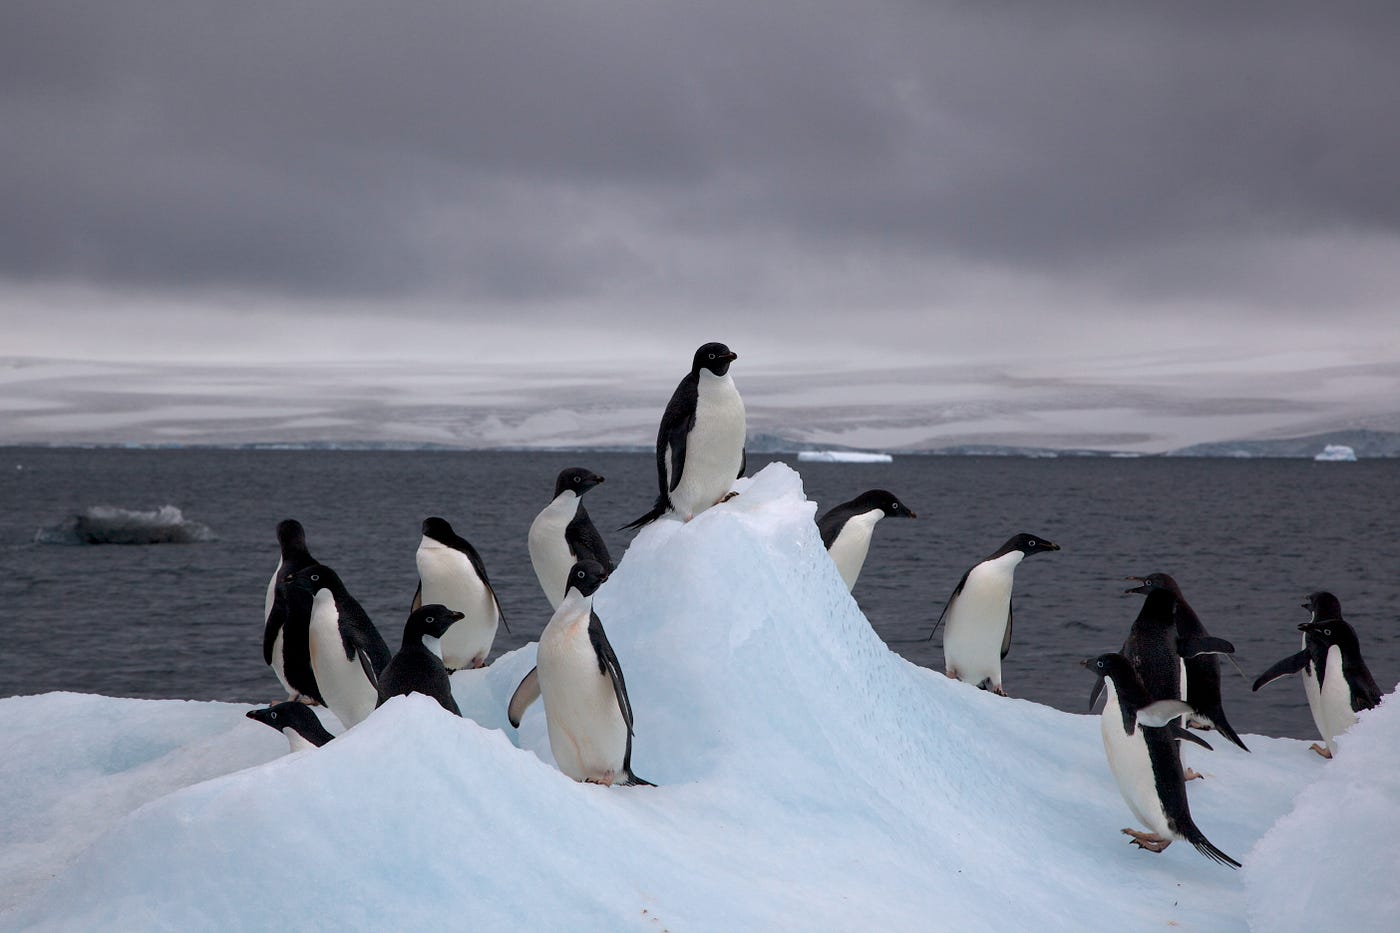 Club Penguin Island – First Impressions